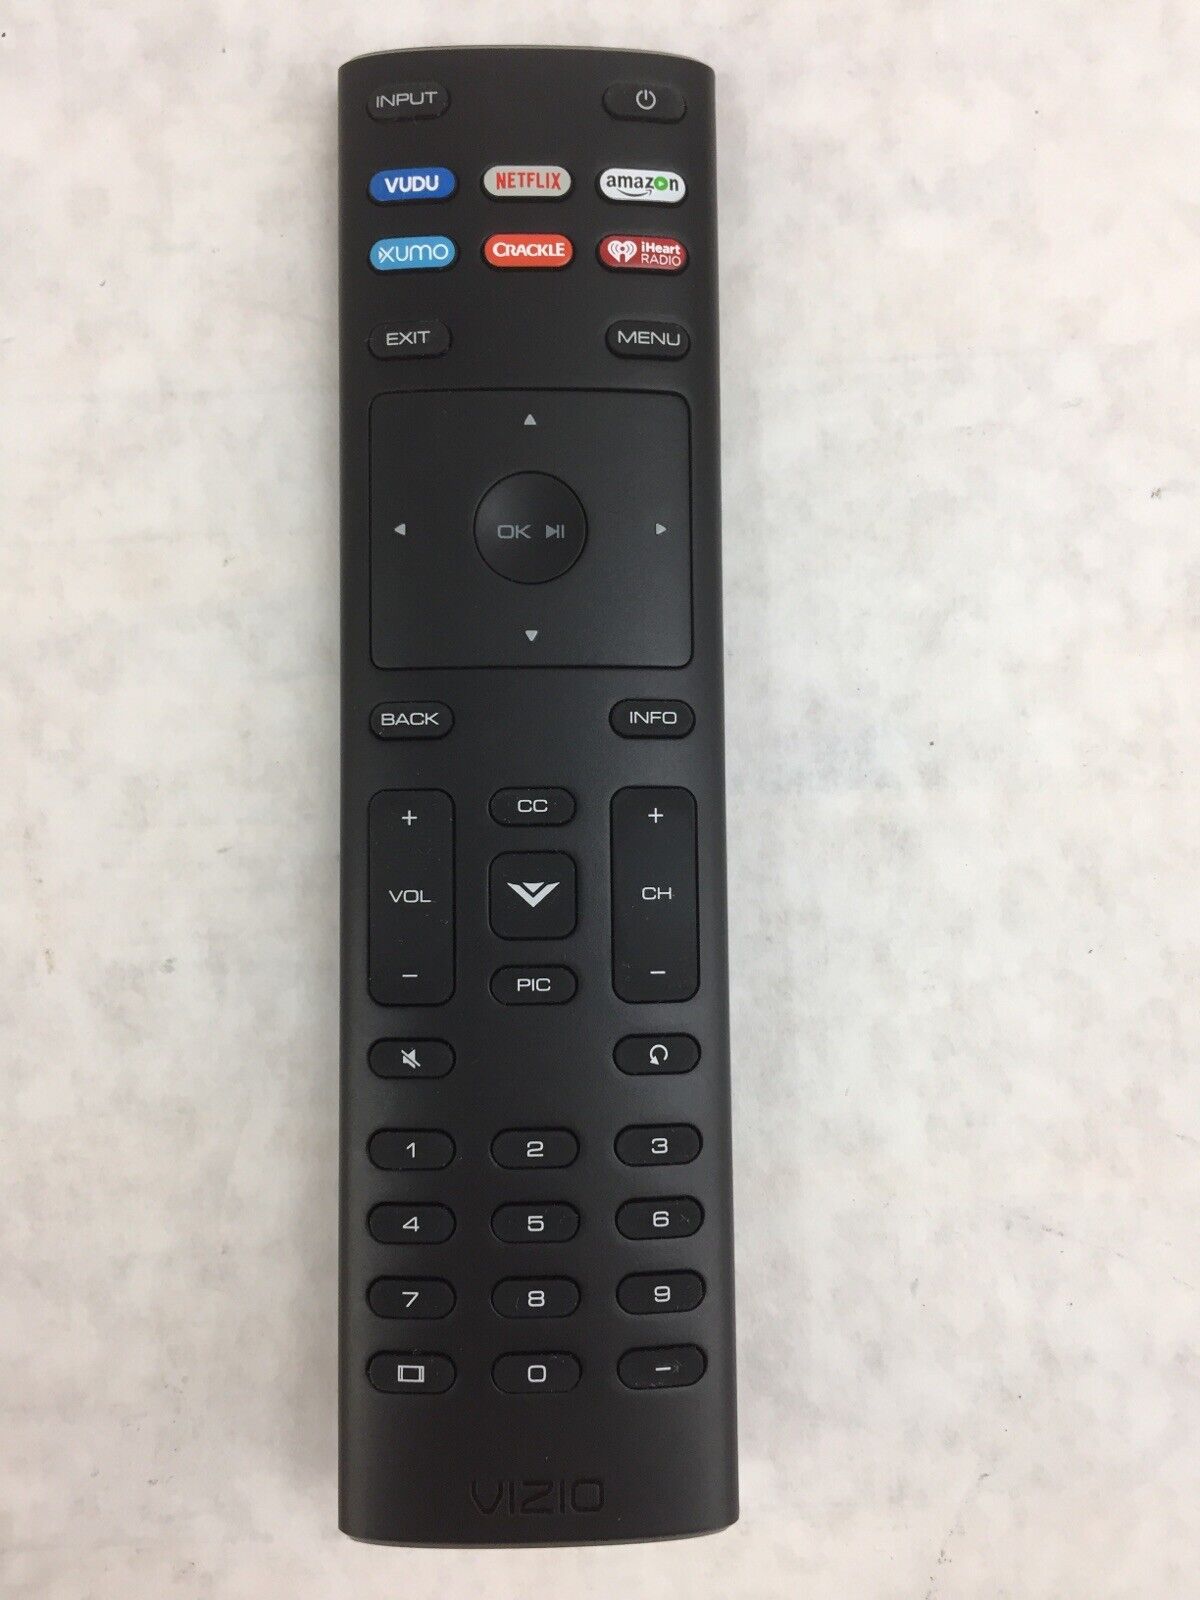 Vizio XRT136 Smart TV Remote Control with Vudu Amazon iheart Netflix 6 Keys